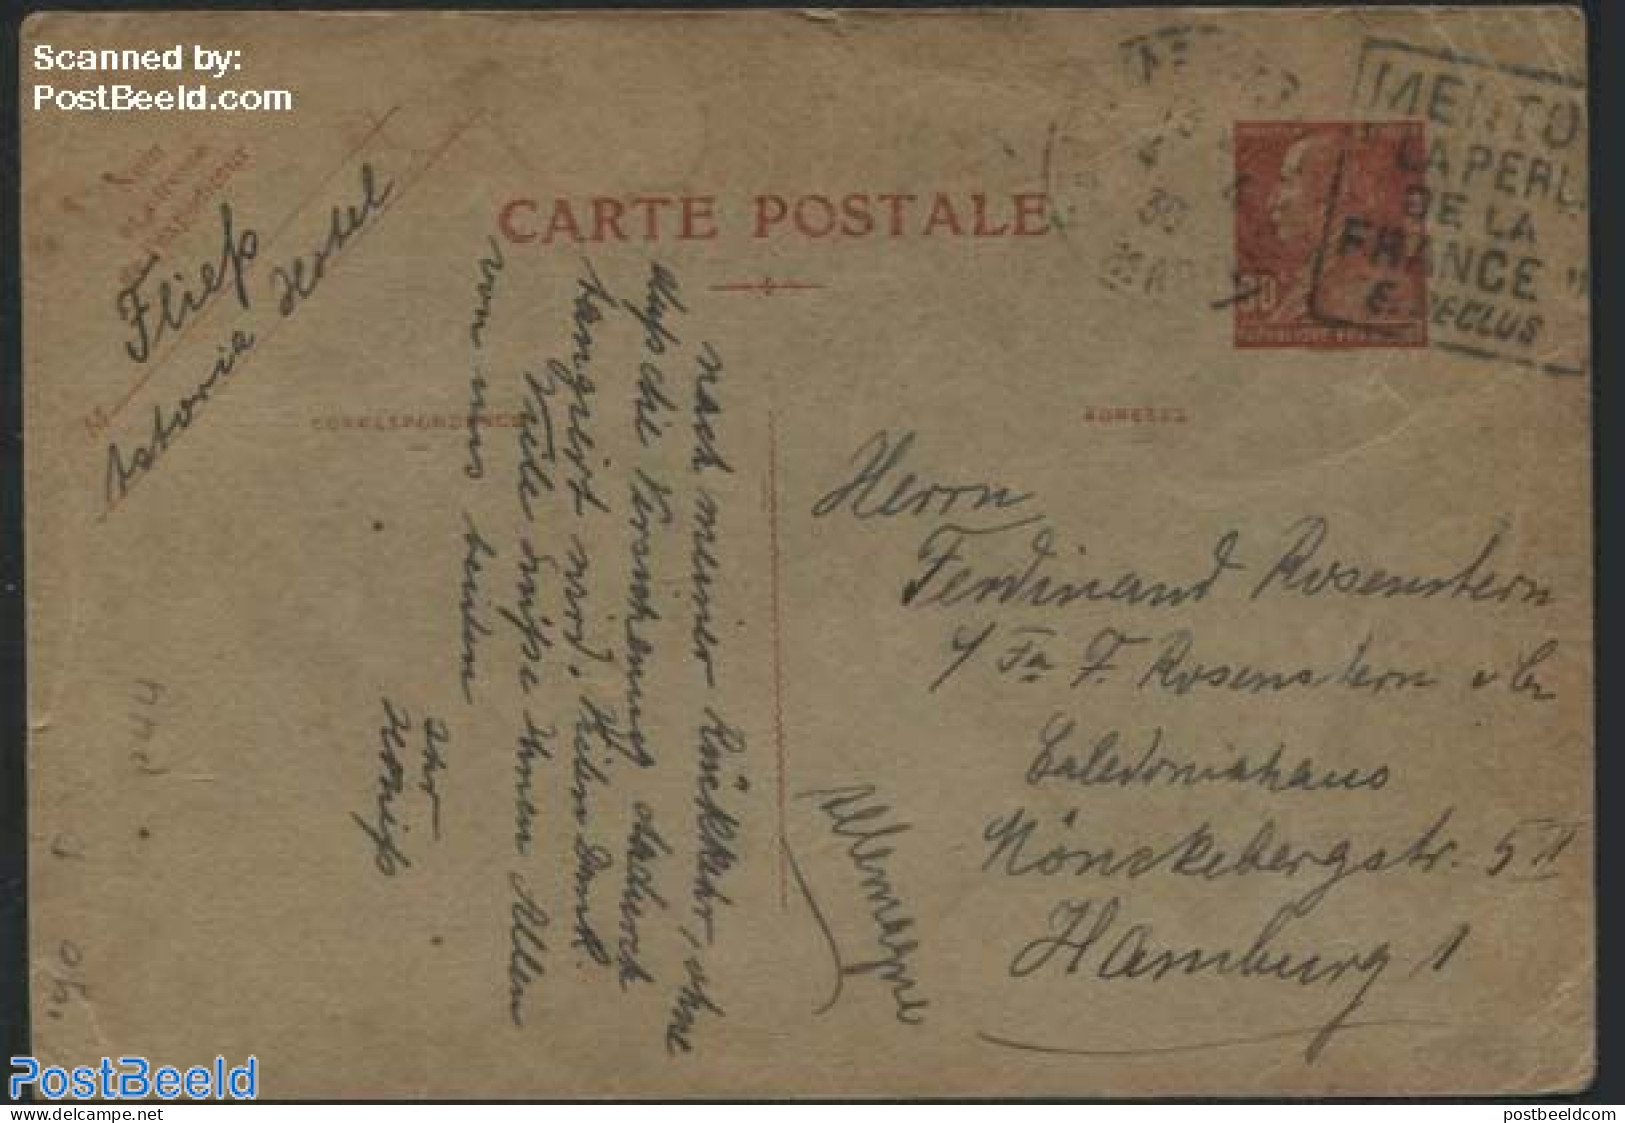 France 1928 Rare Berthelot Postcard, Wrinkled, Used Postal Stationary - 1927-1959 Briefe & Dokumente